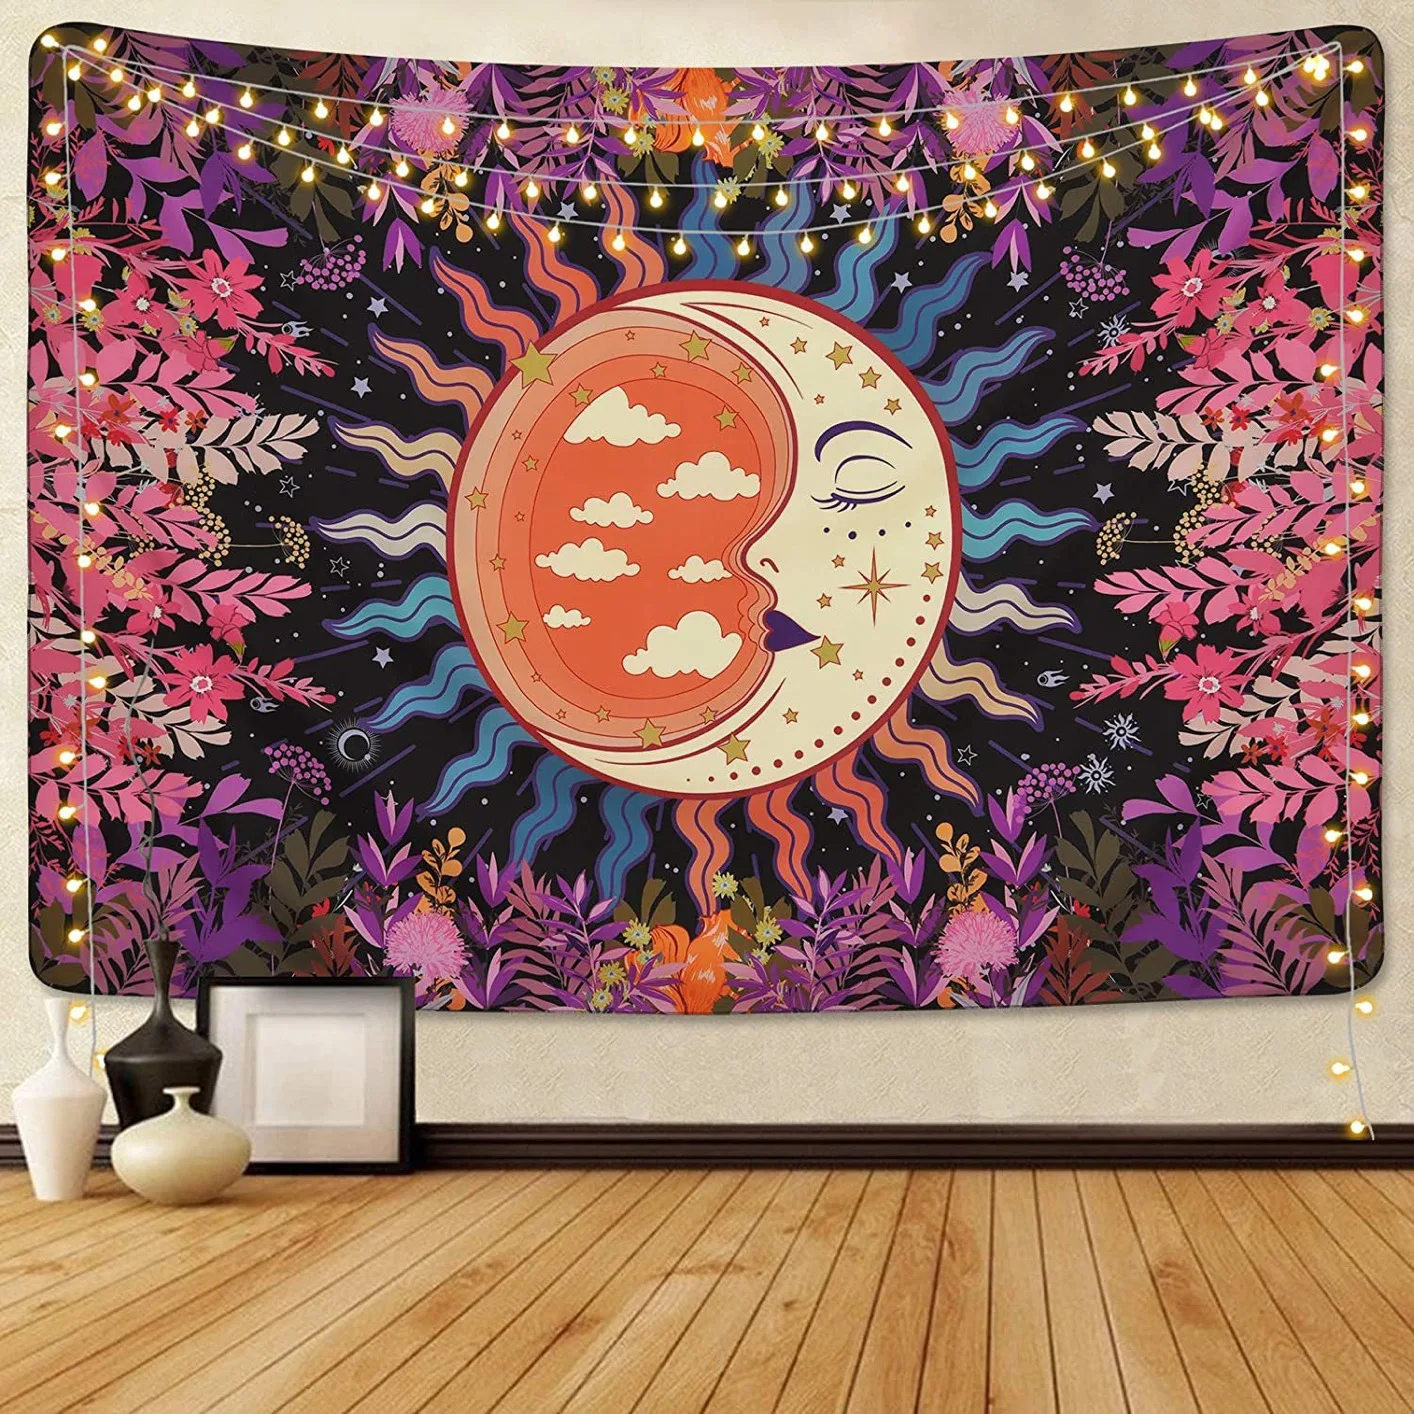 Wholesale Custom Printed Tarot Boho Hippy Wall Hanging Tree of Life Woven Blanket Moon Phase Mandala Tapestry for Home Decor